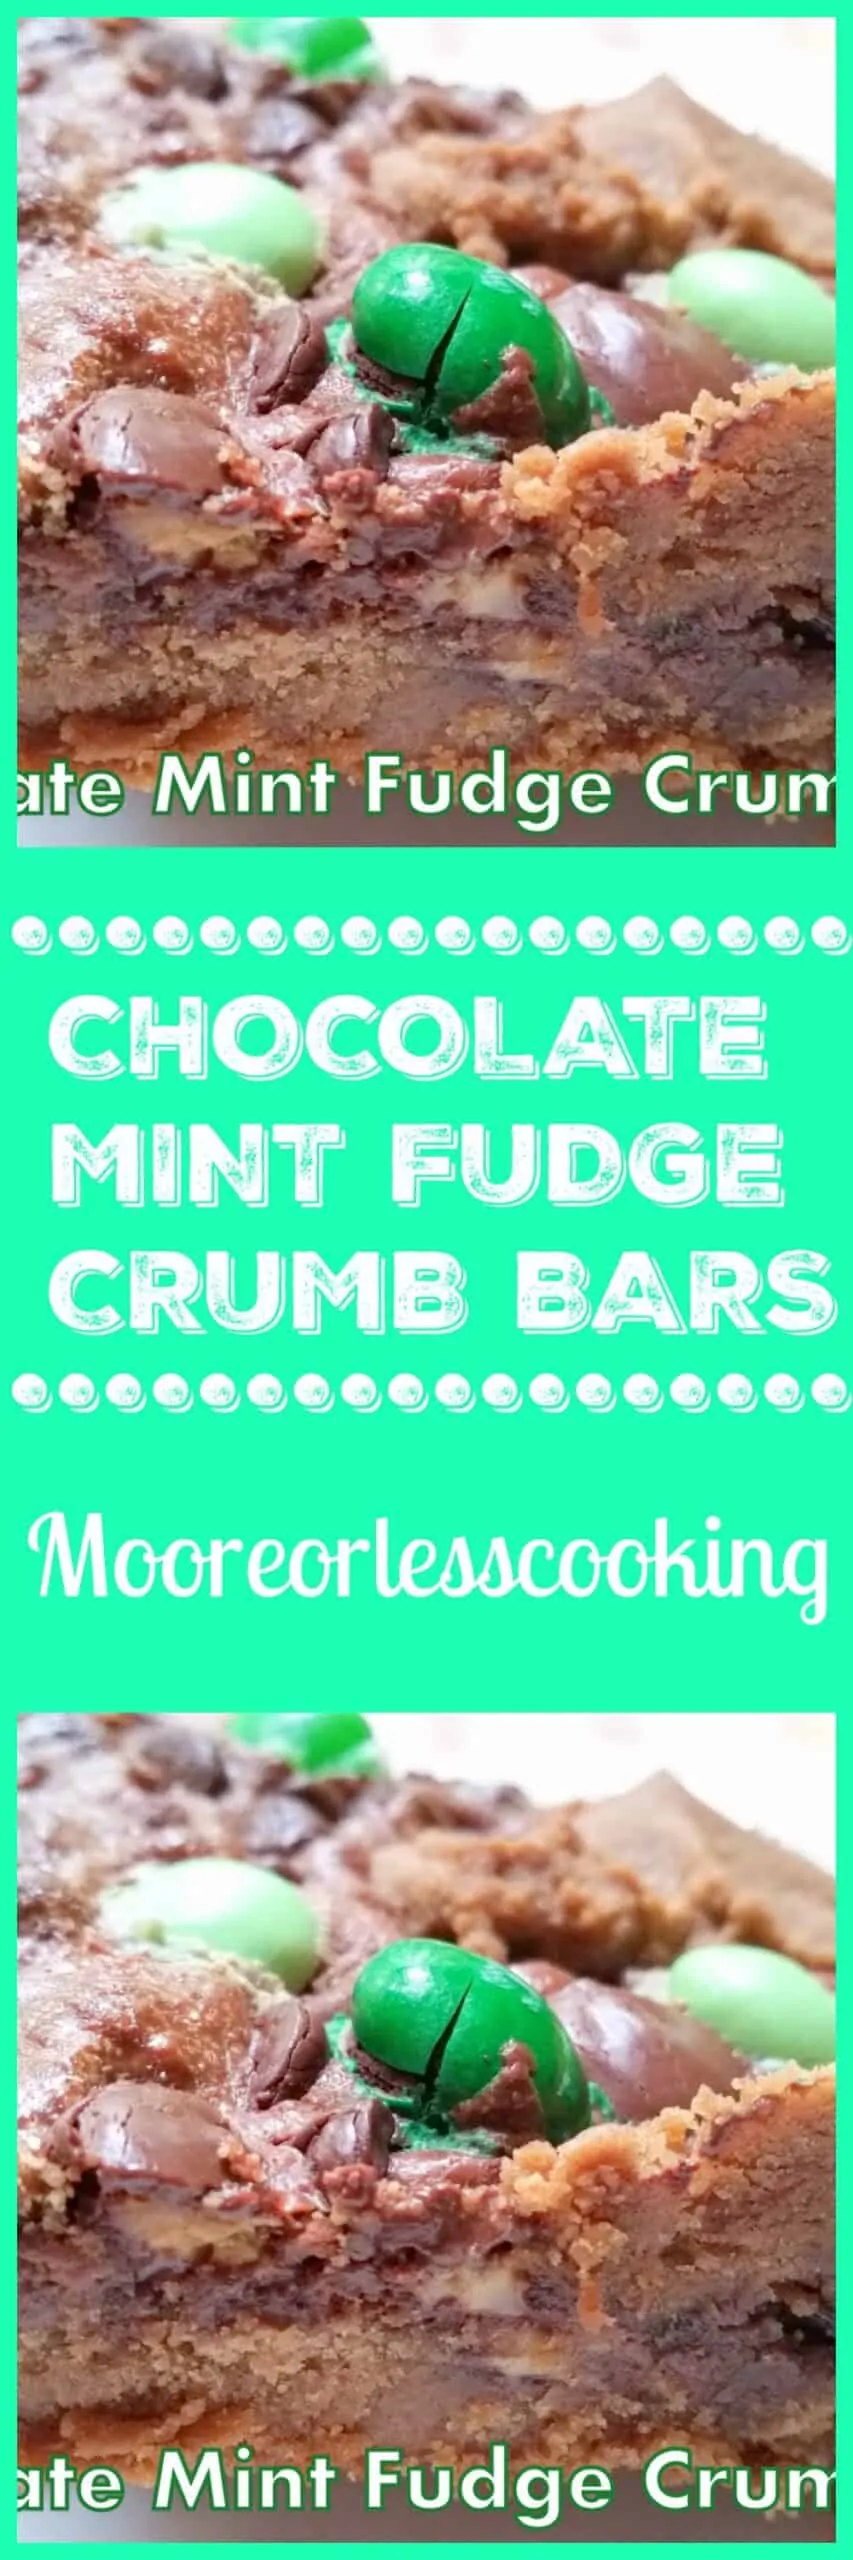 Chocolate Mint Fudge Crumb Bars. #dessertbar #chocolate #mint #mooreorlesscooking via @Mooreorlesscook